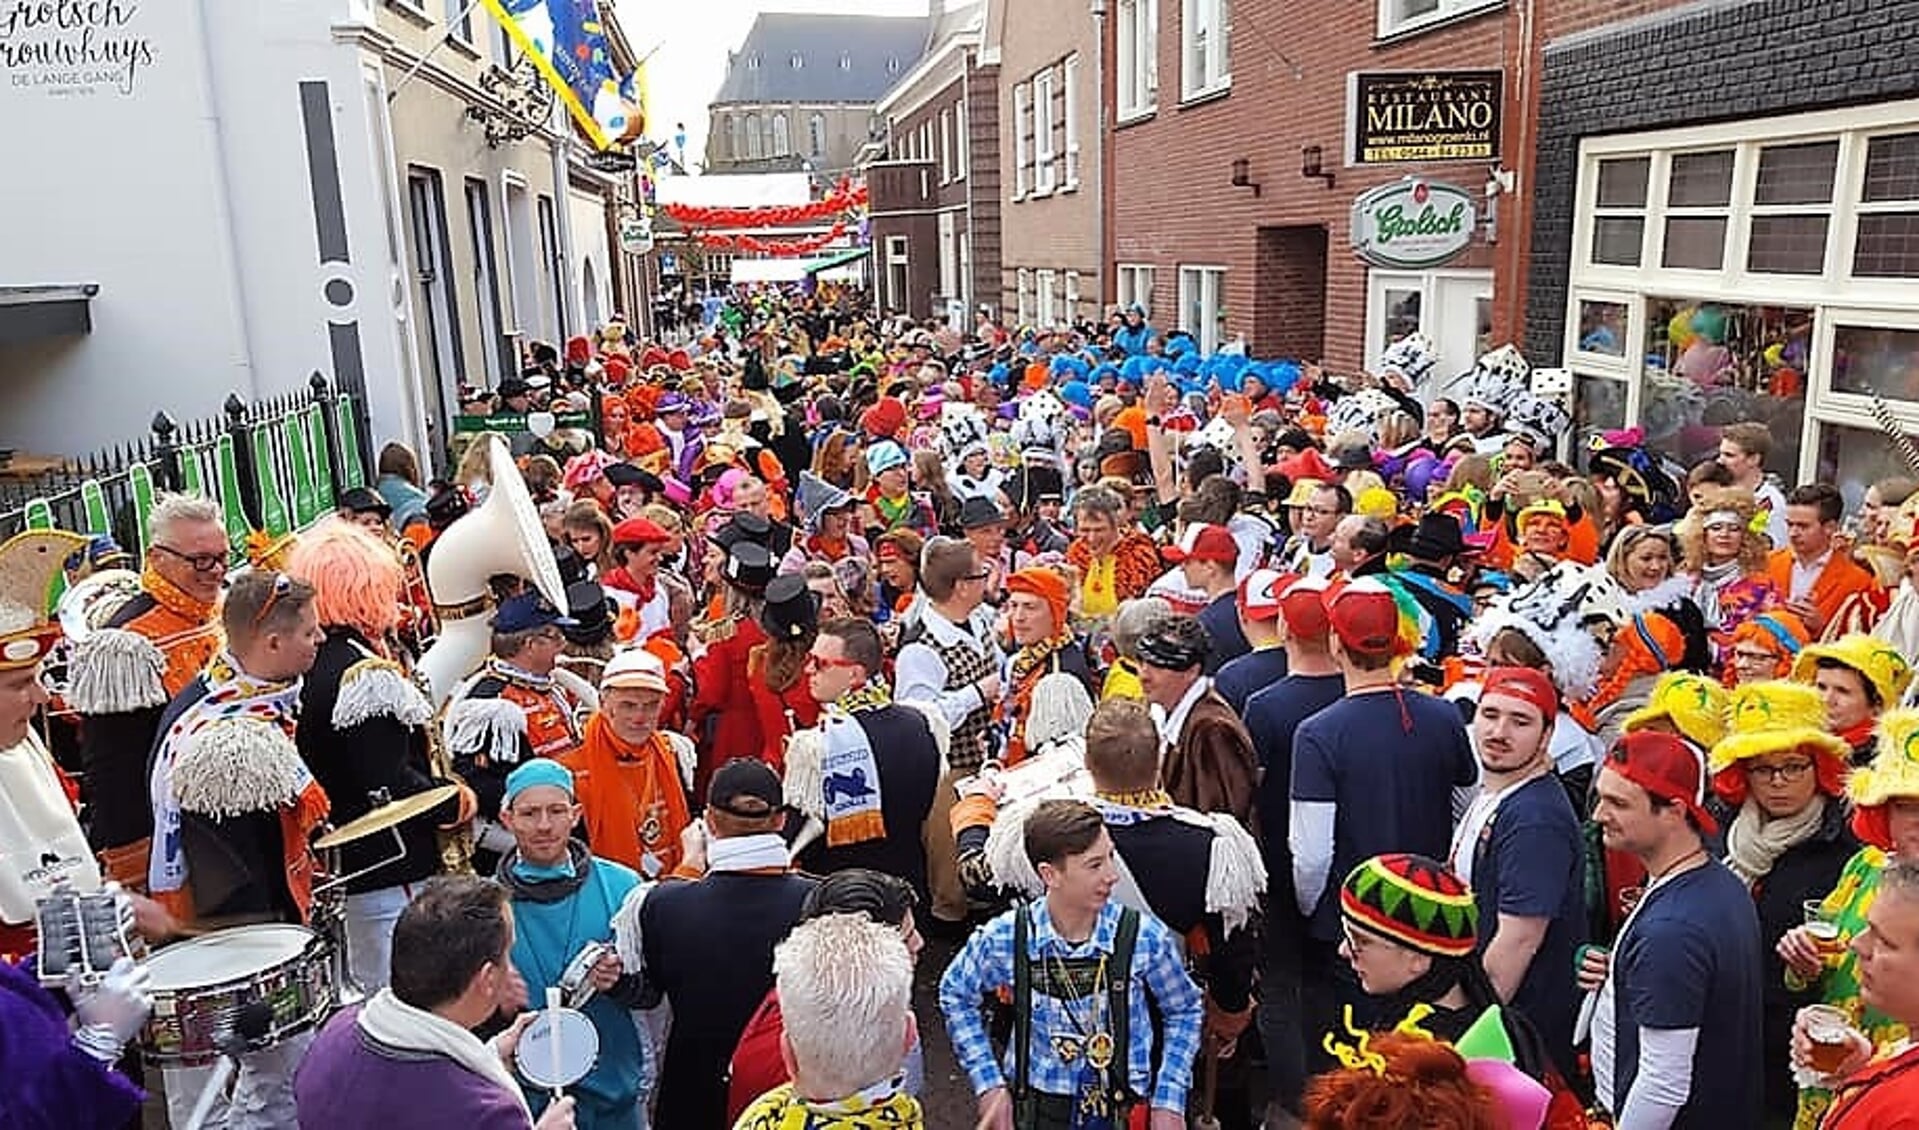 Carnaval in Groenlo toen nog niemand van corona had gehoord. Foto: Theo Huijskes